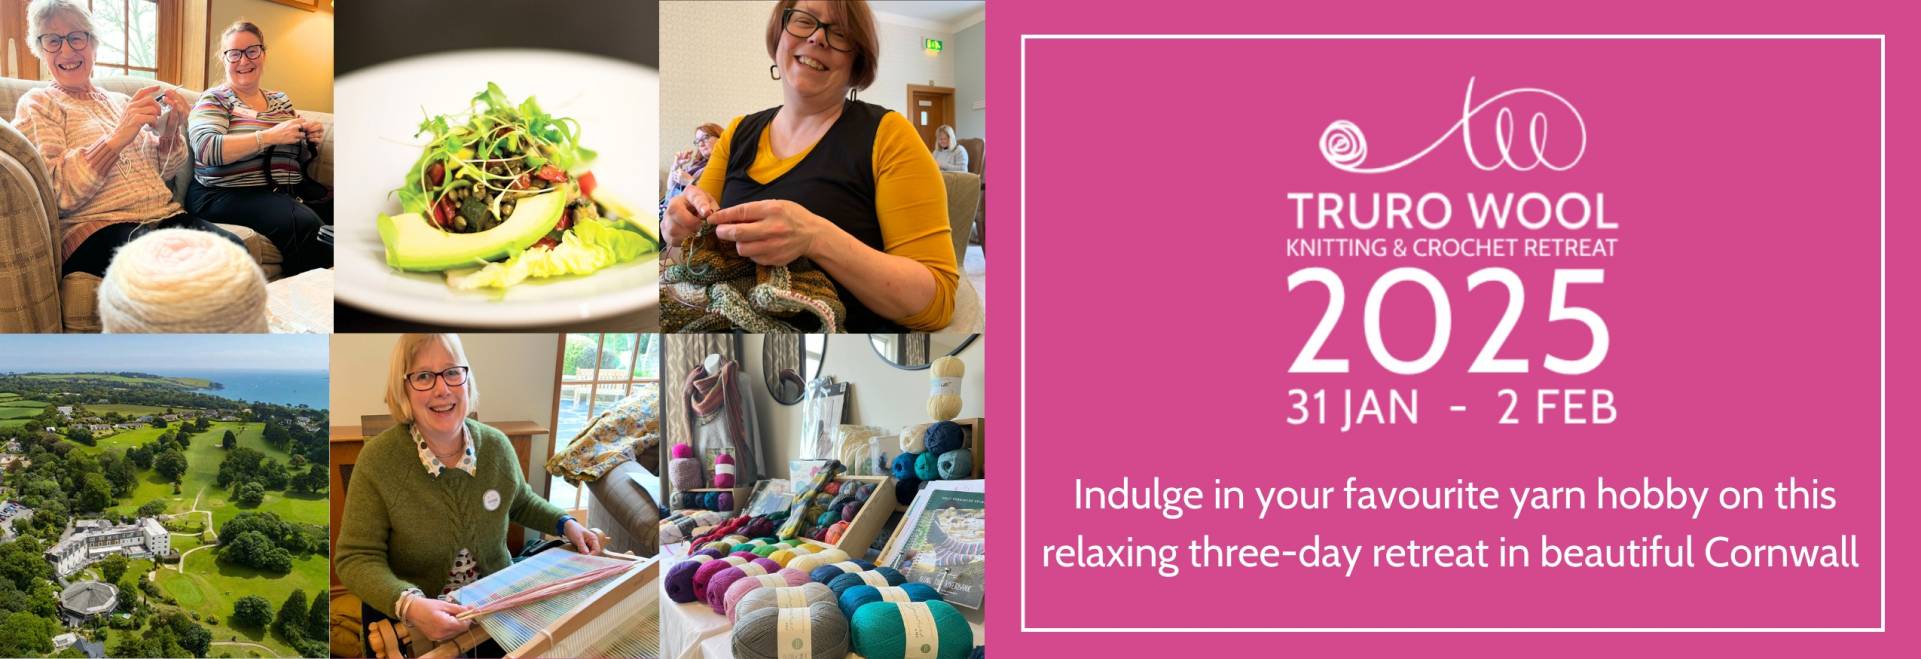 Truro Wool Knitting & Crochet Retreat Homepage Banner